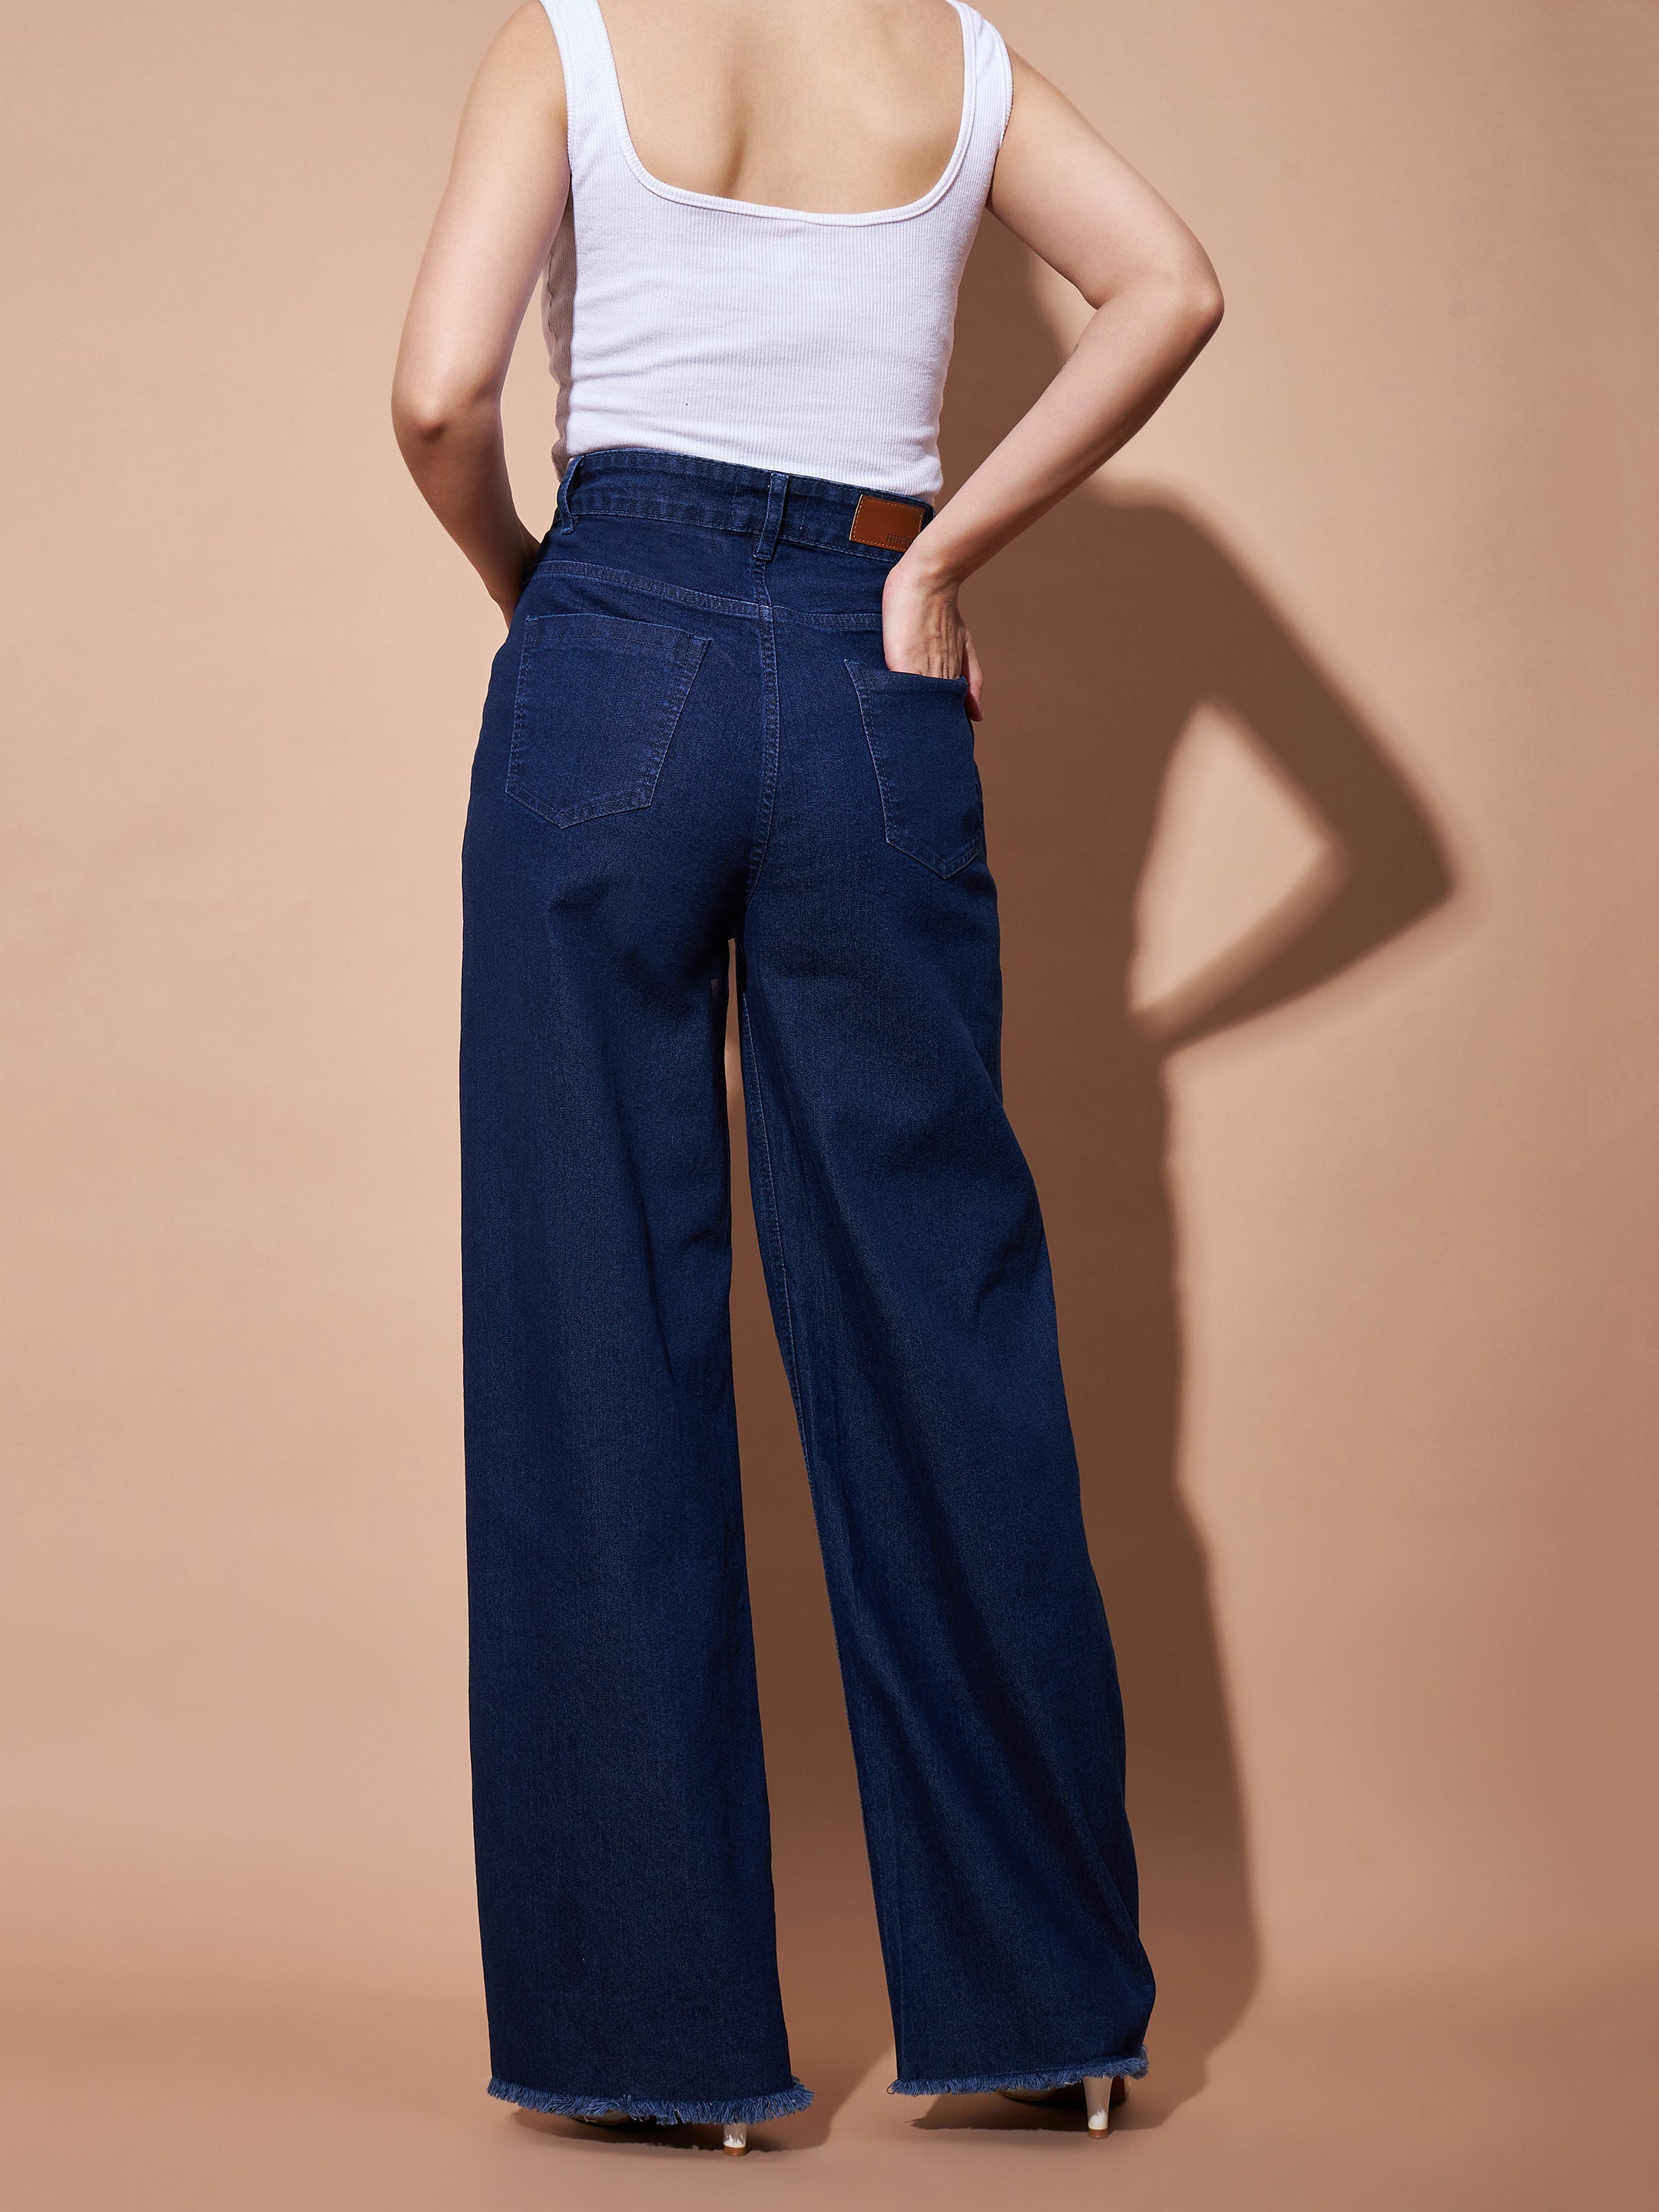 Women's Navy High Waist Flap Pocket Straight Jeans - Lyush